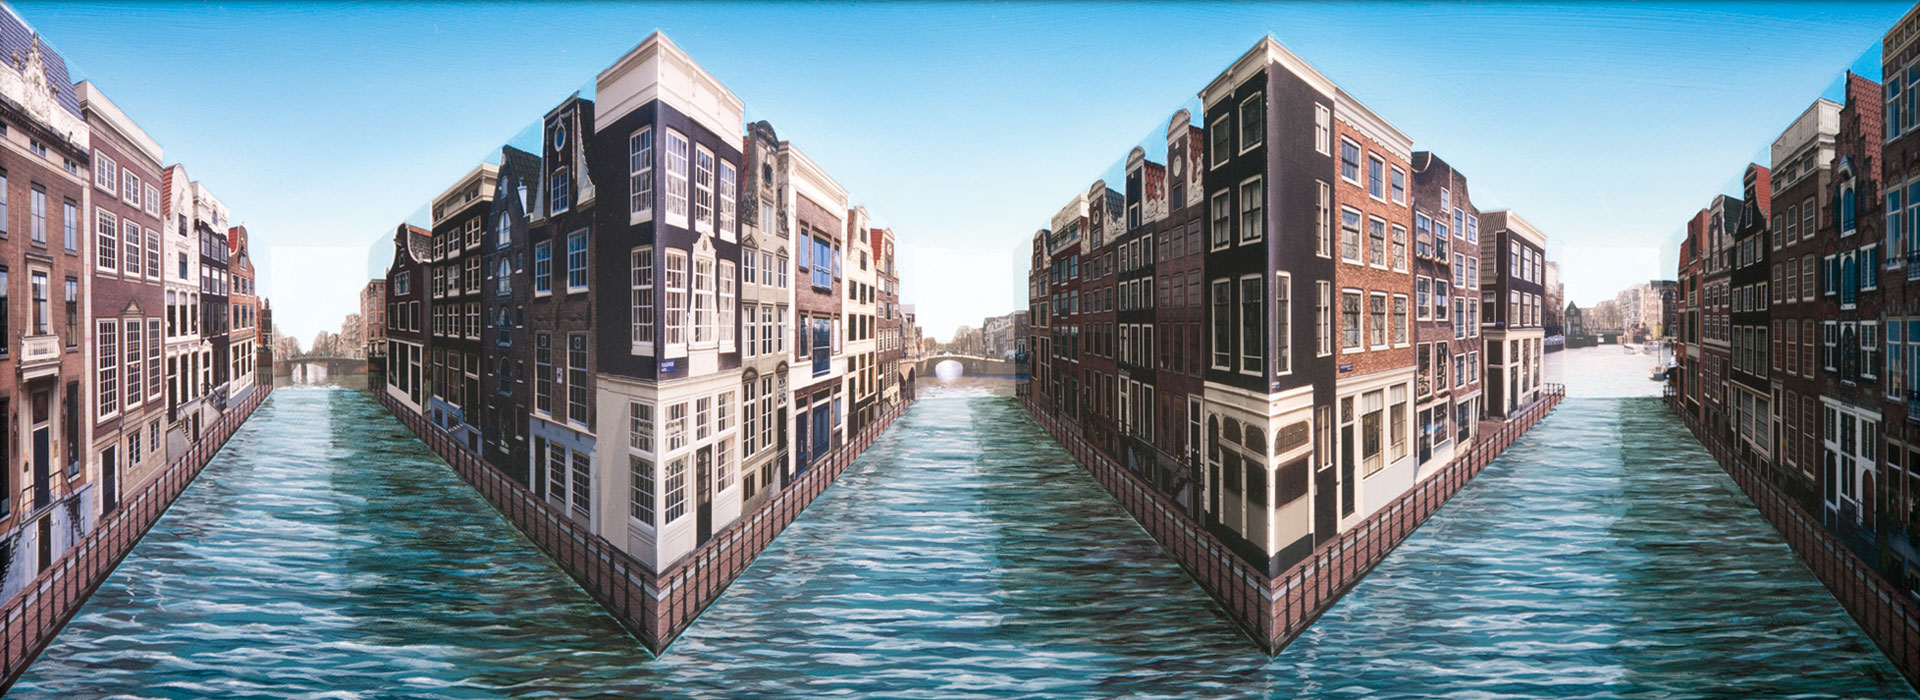 Patrick Hughes - 'Waterways' 2014 - 47 x 94 x 12